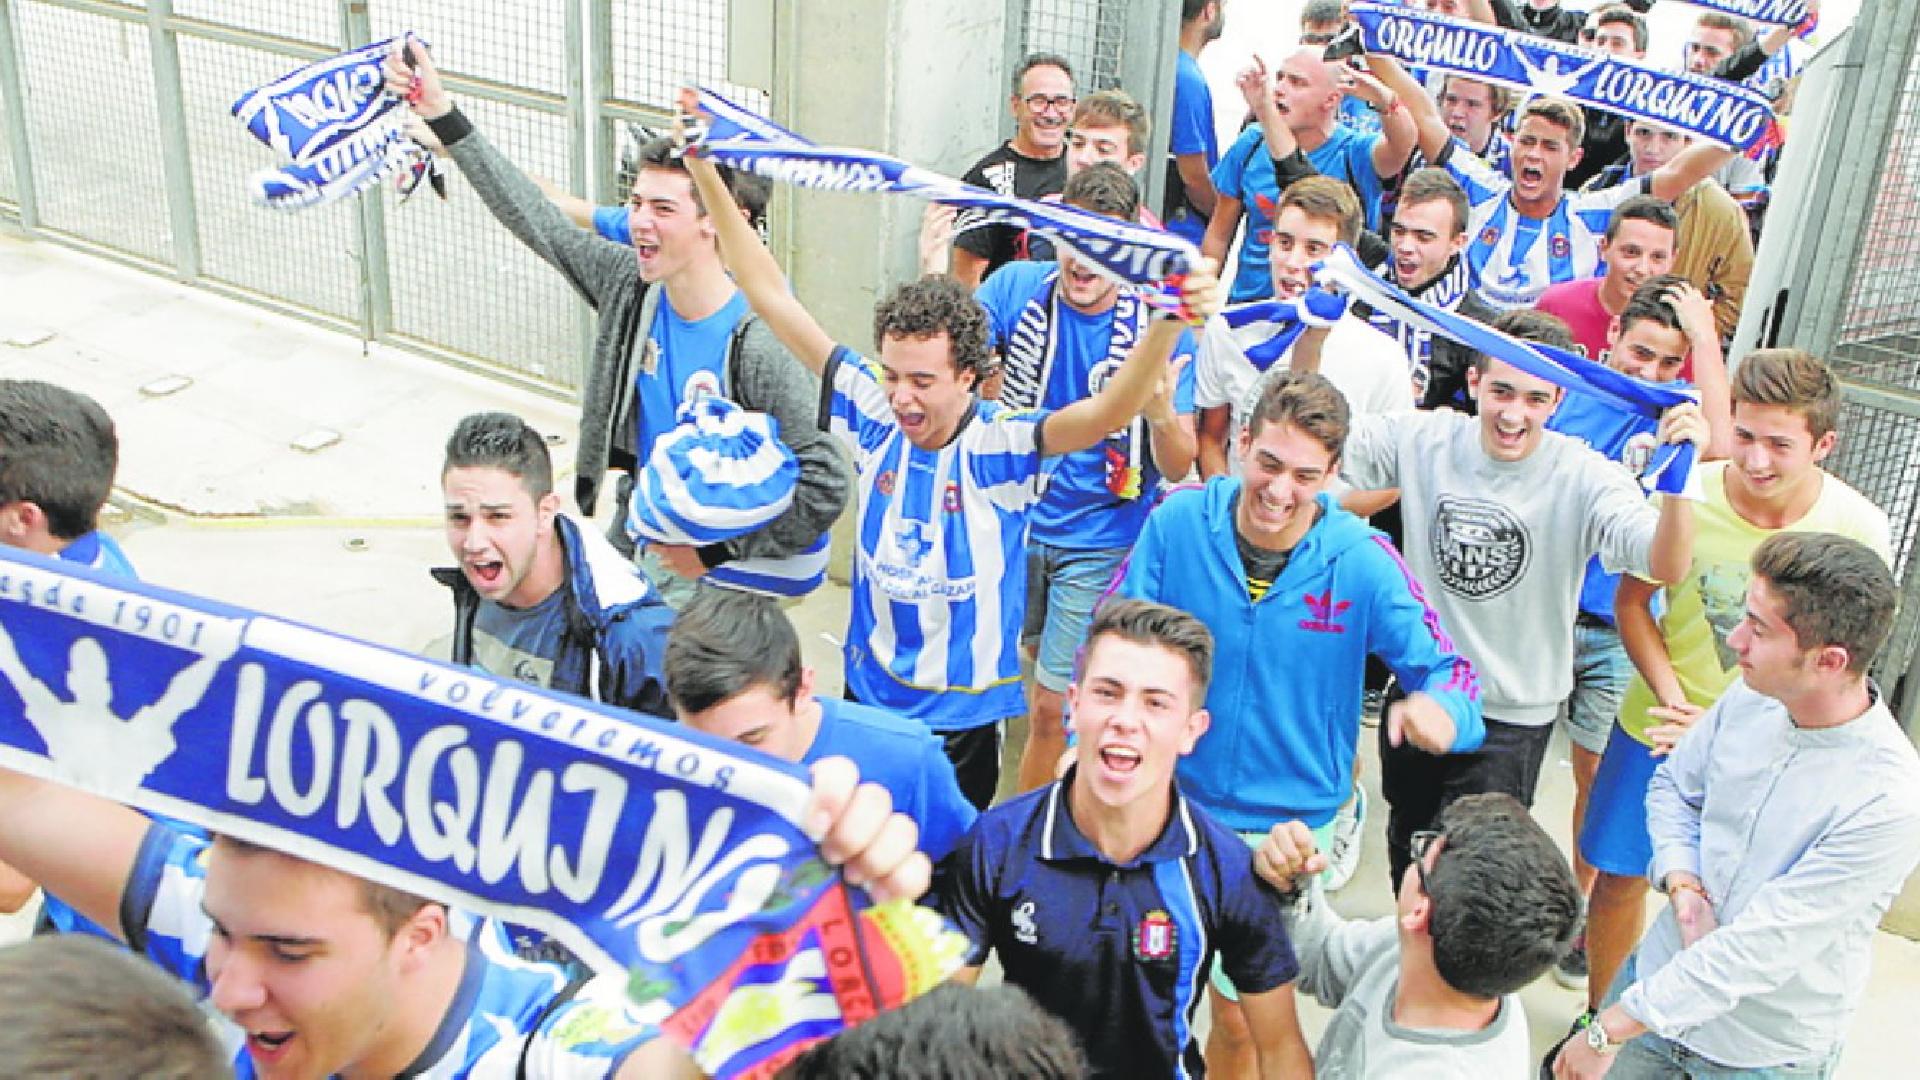 Lorca fans prepare a massive trip to La Unión